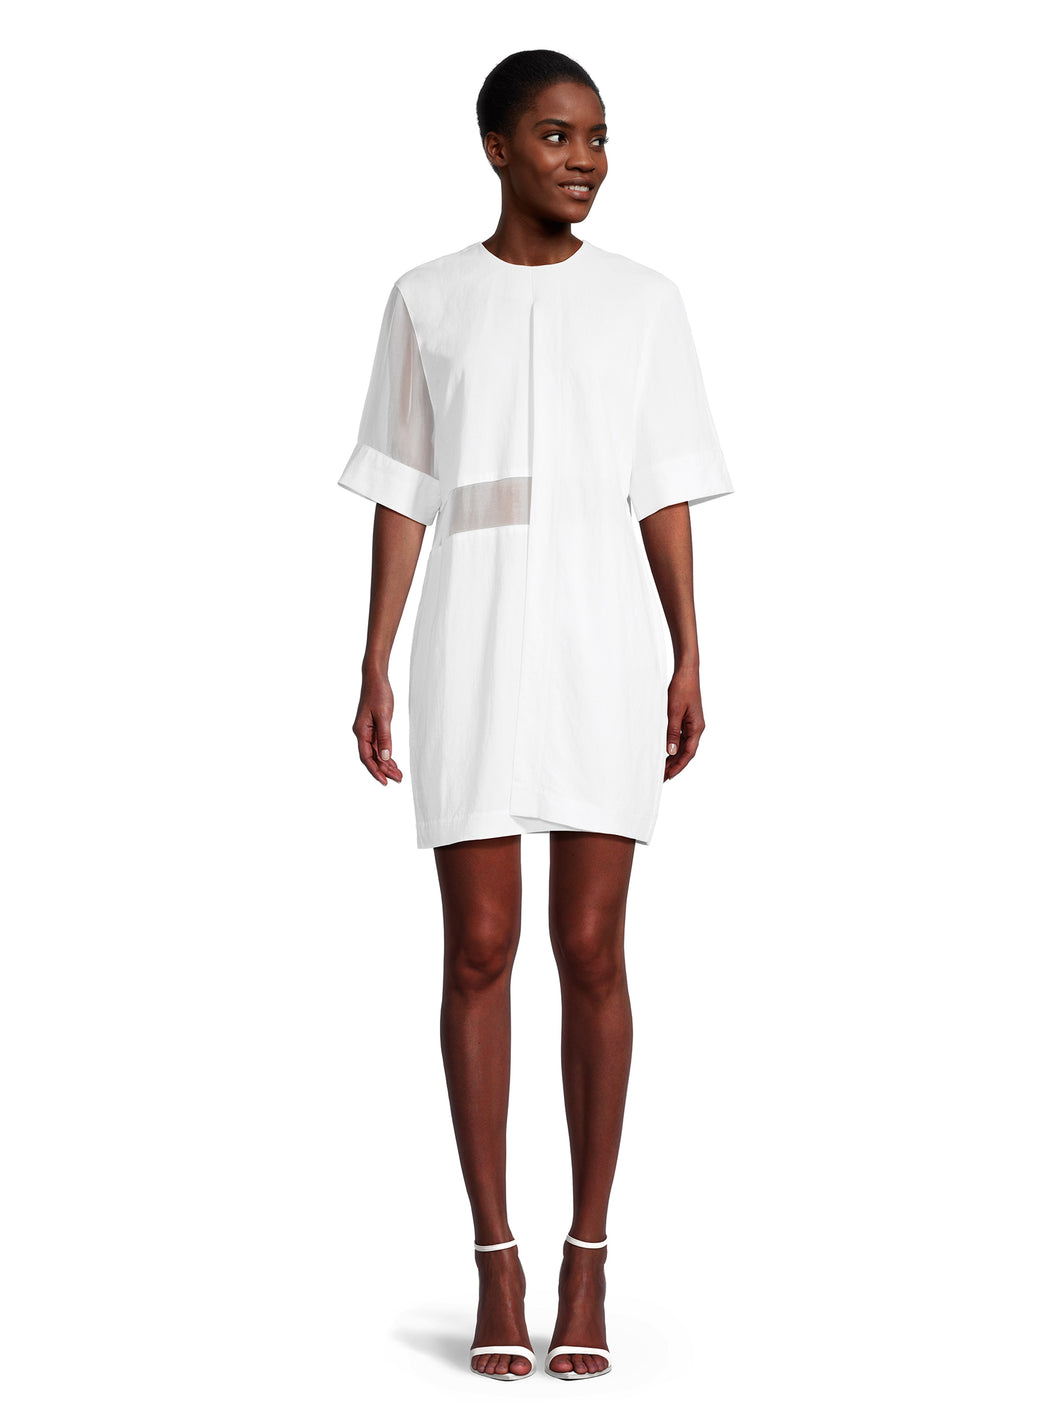 DALMAR - Linen | Oversized Shift Dress with Sheer Sleeve